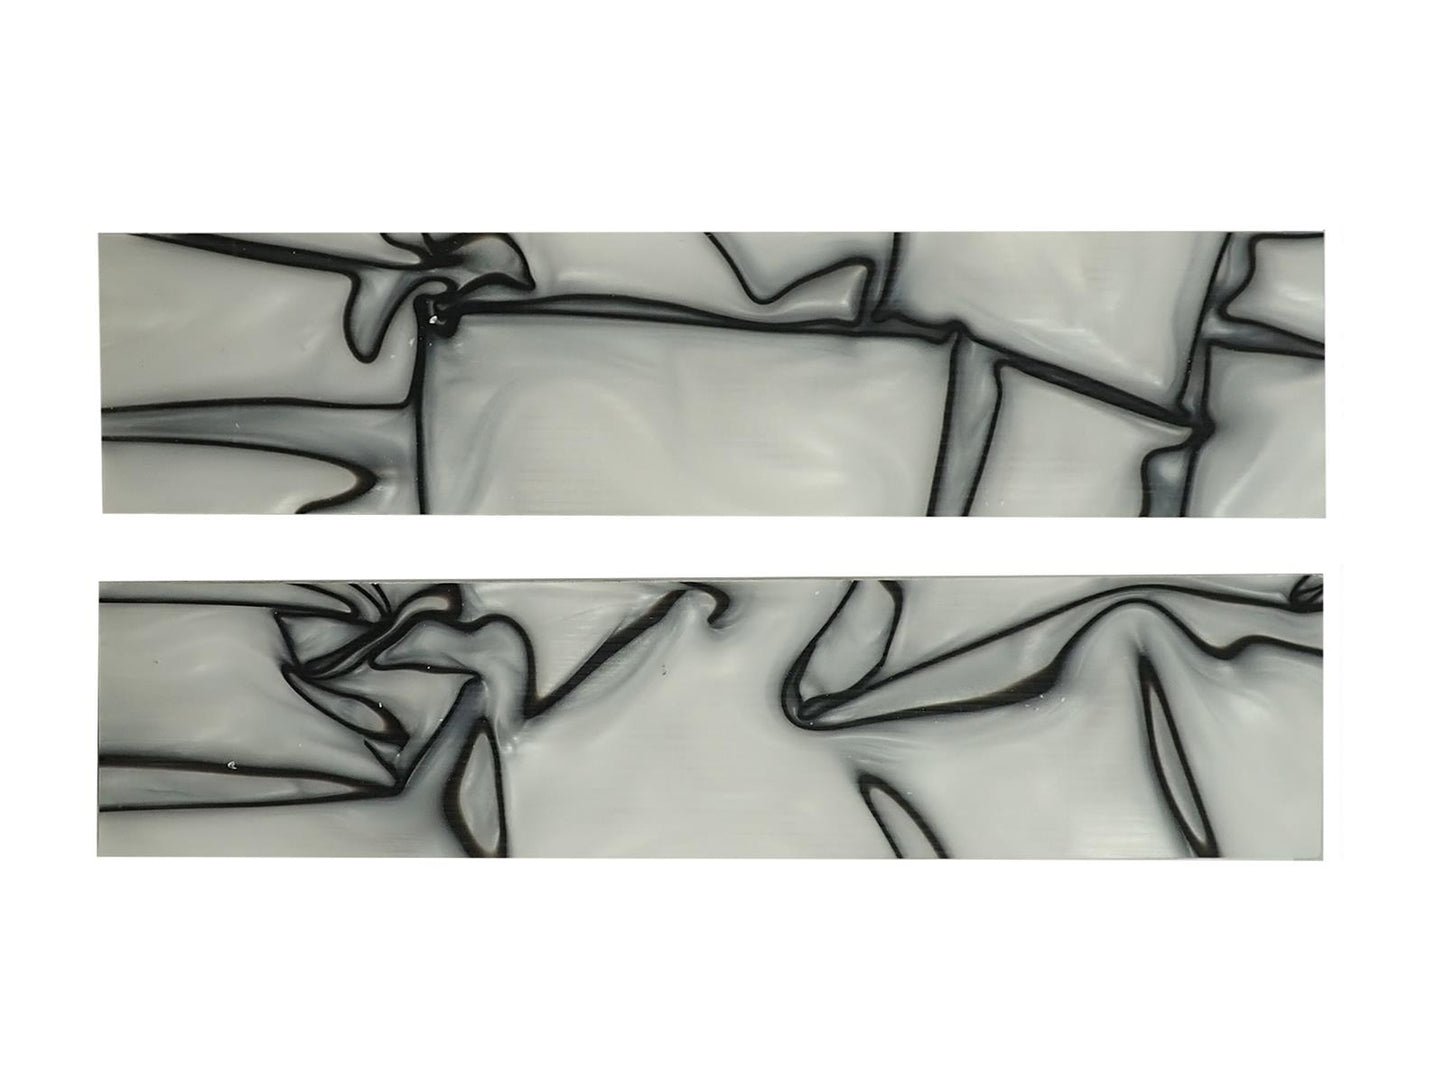 Turners' Mill Cracked Ice Abstract Kirinite Acrylic Knife Scales (Pair) - 152.4x38.1x6.35mm (6x1.5x0.25")